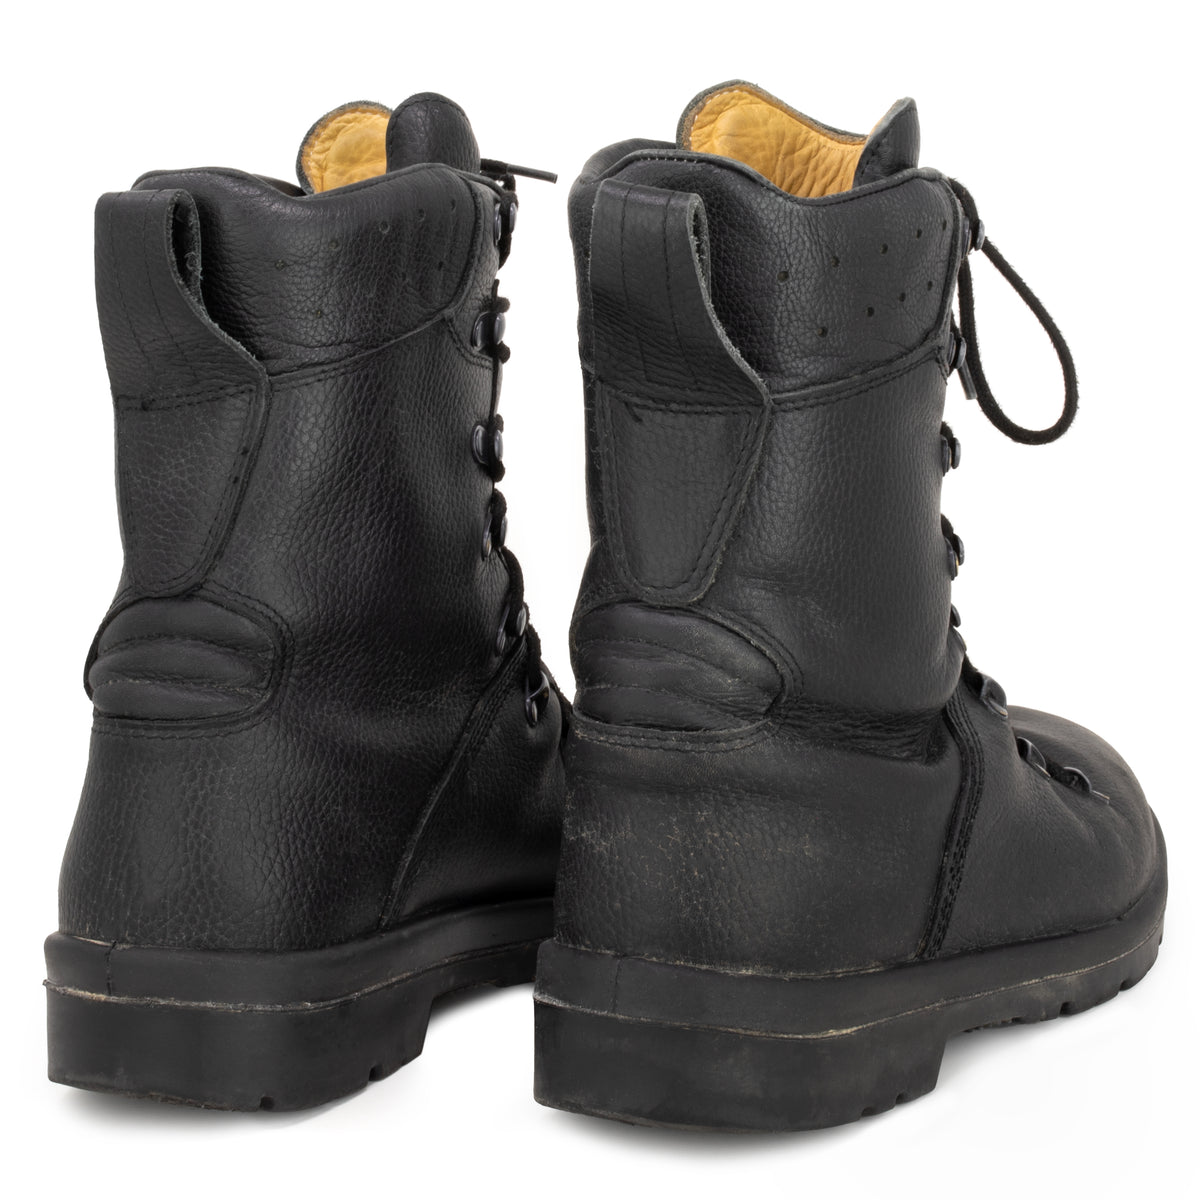 German Ranger Boots | Black Leather